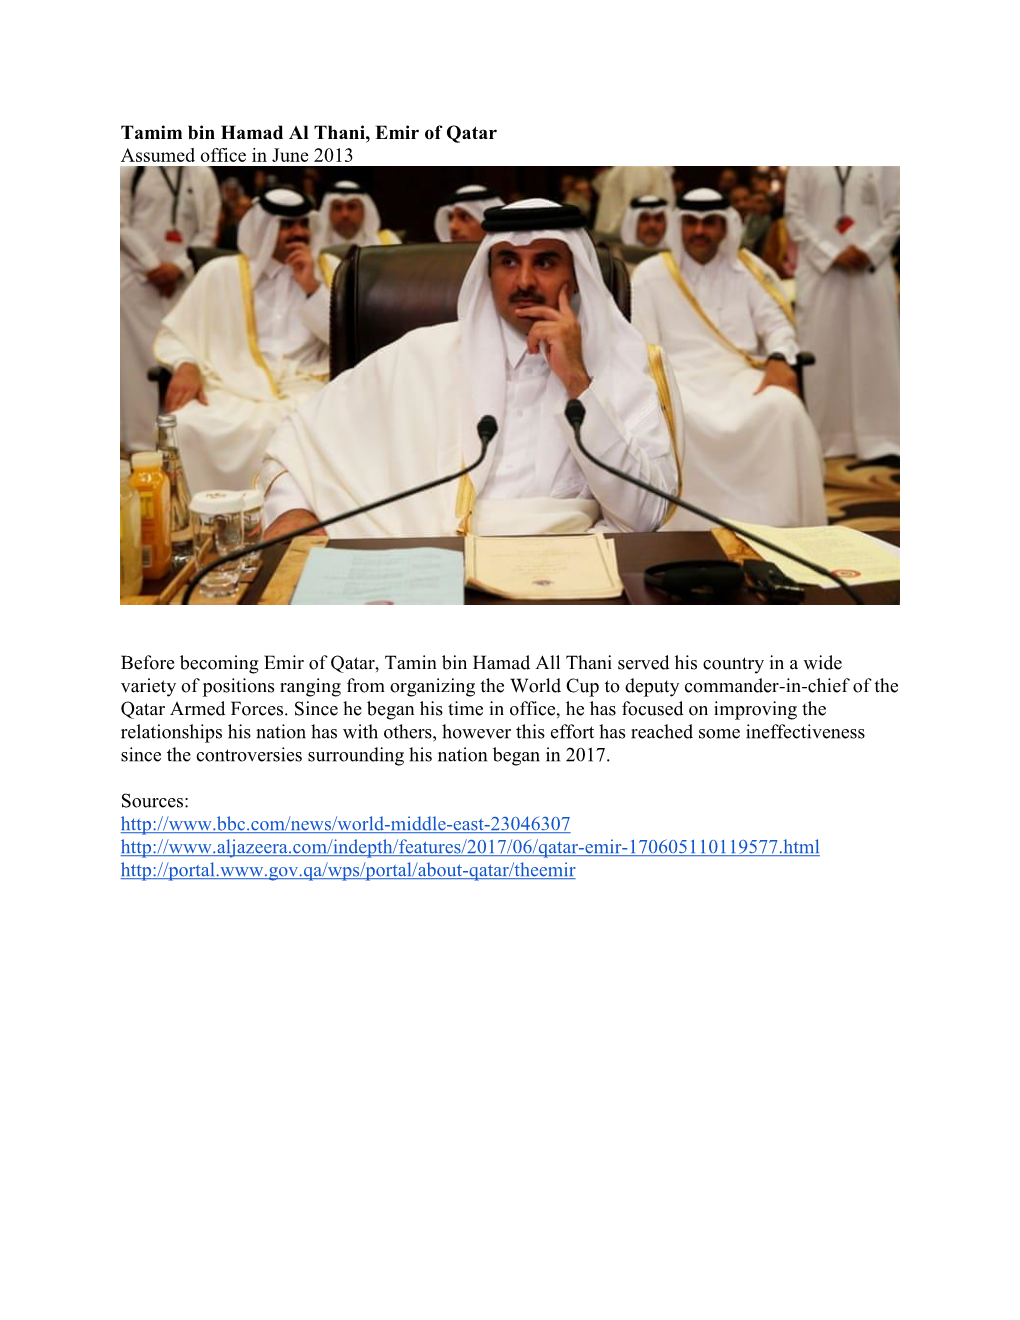 Tamim Bin Hamad Al Thani, Emir of Qatar Assumed Office in June 2013